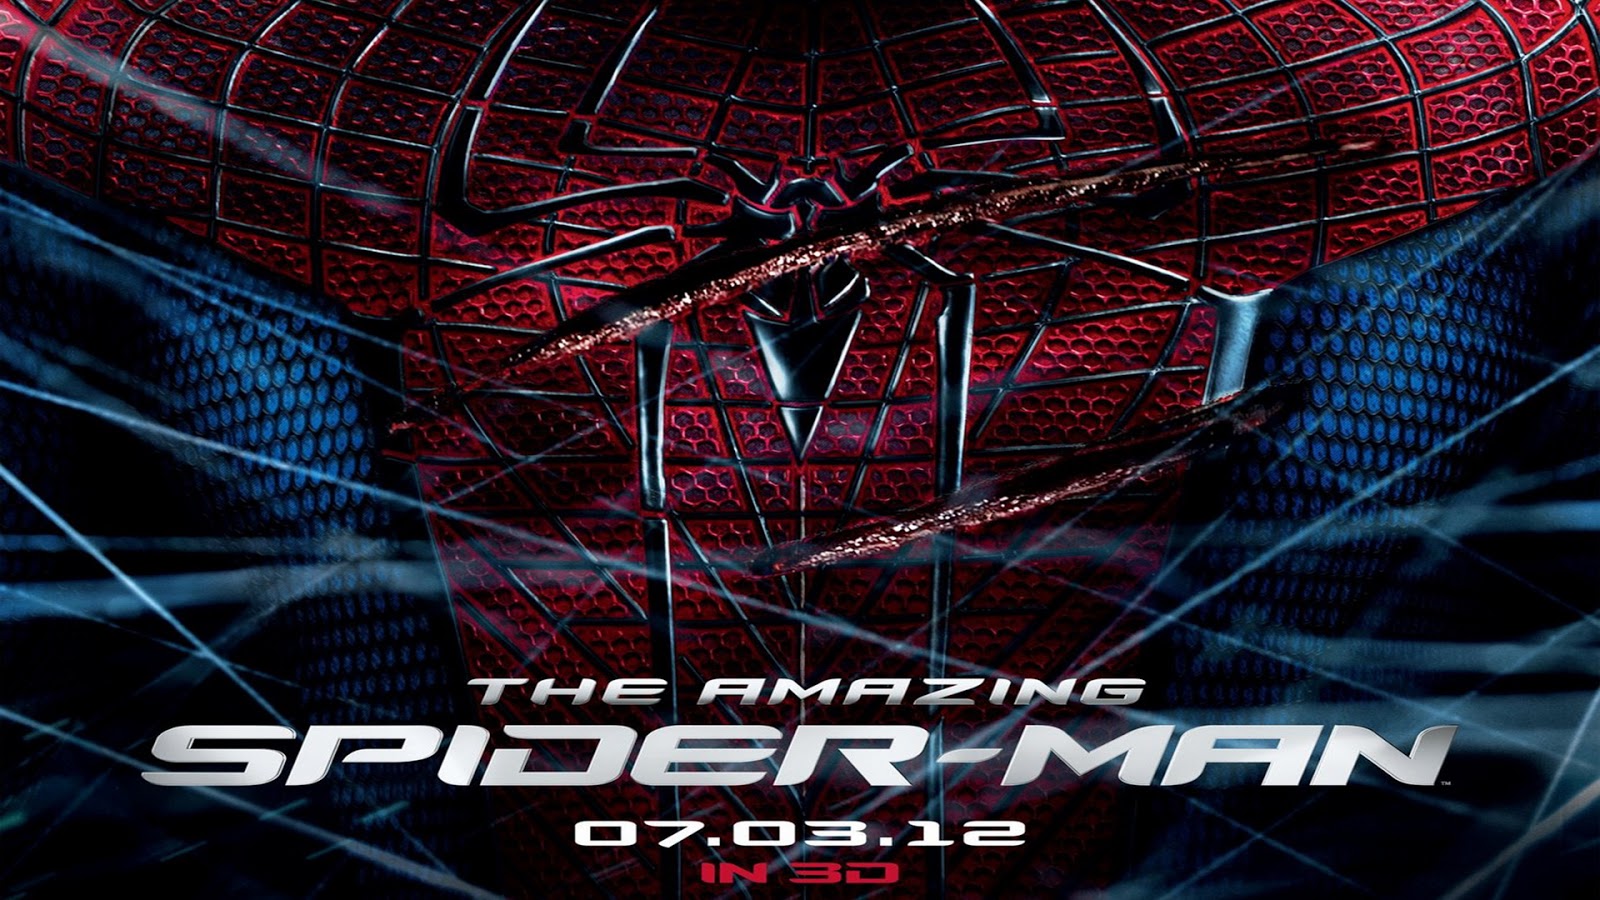 HD Wallpaper The Amazing Spiderman 1080p